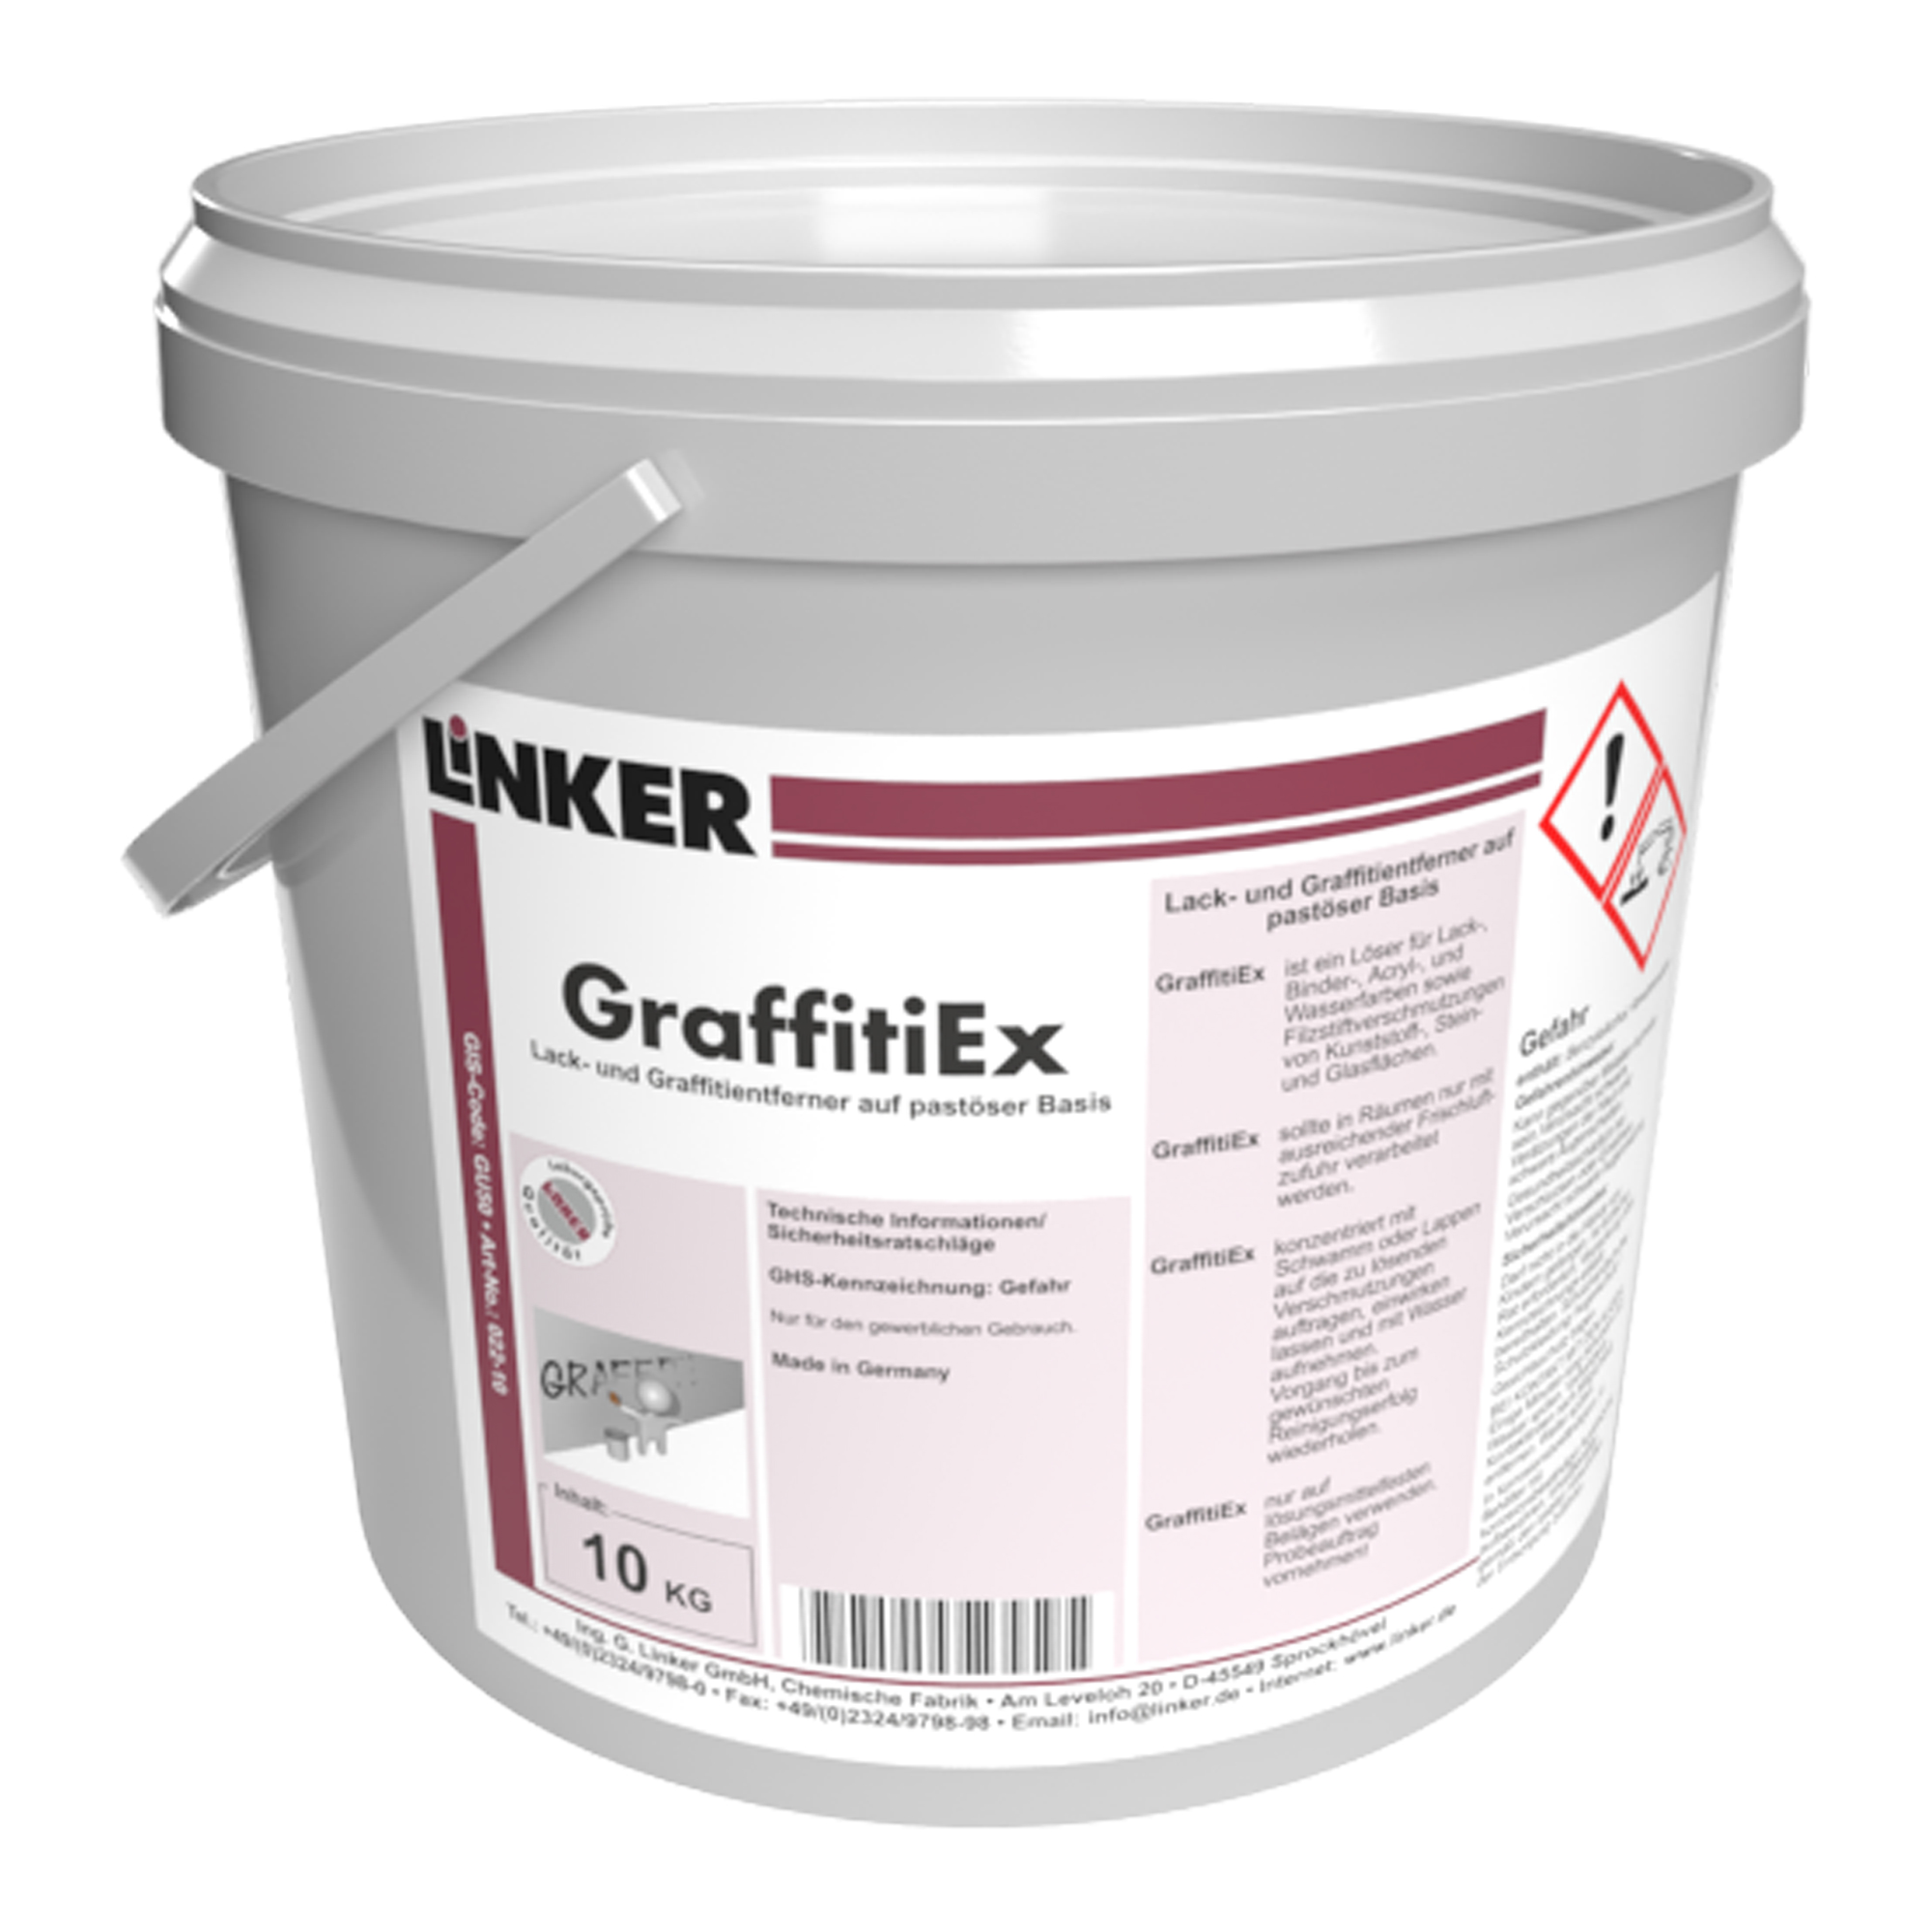 Linker GraffitiEx Paste Graffiti-Entferner 10 kg Eimer 022-10E_1